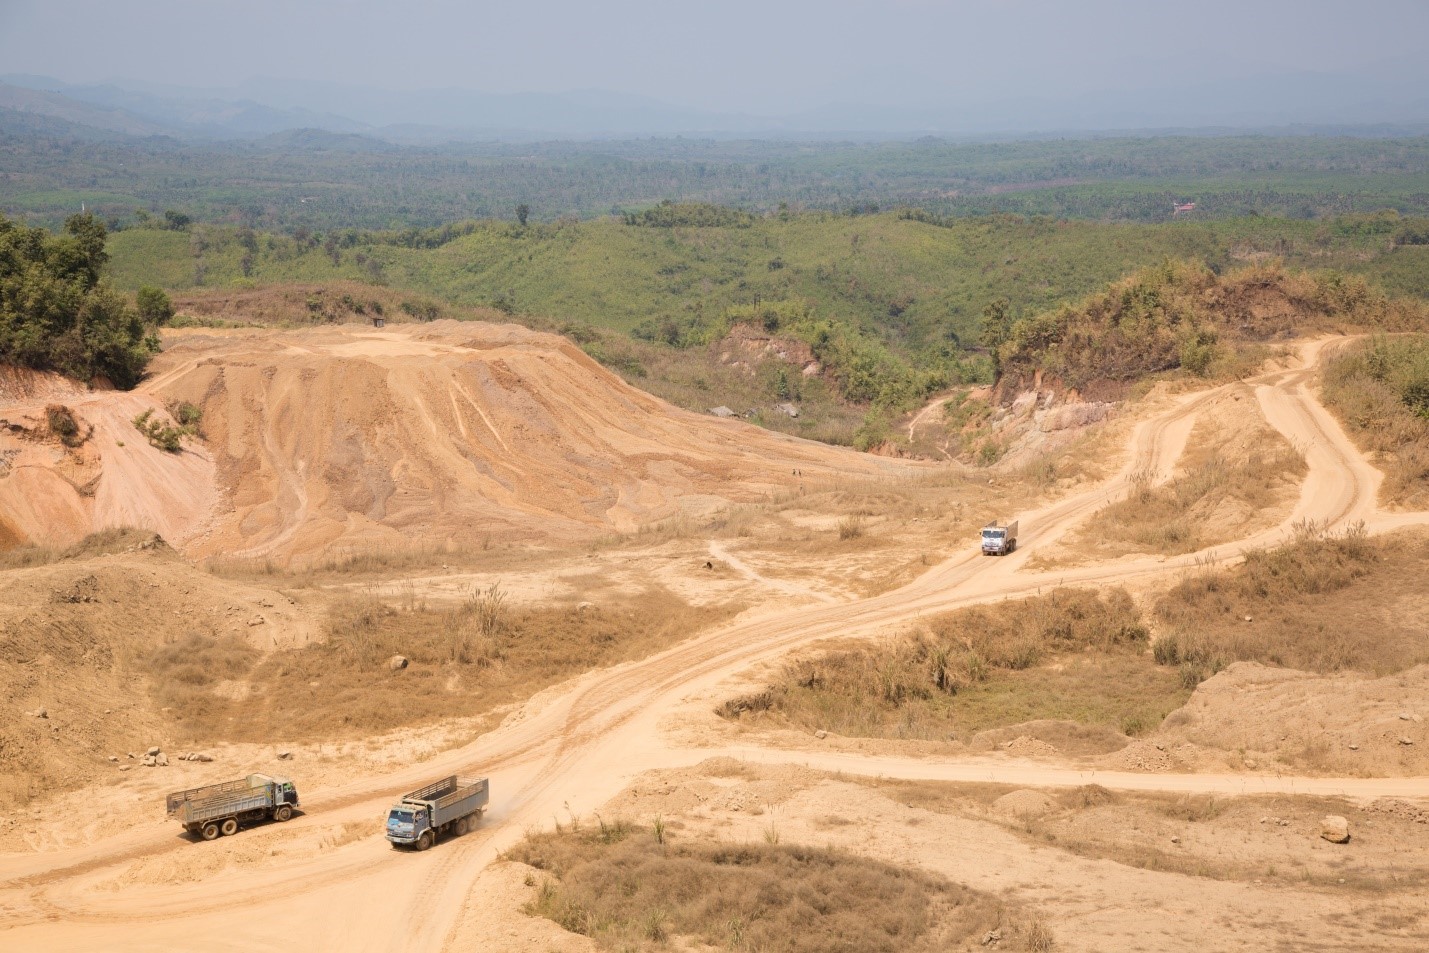 Heinda Tin mine, located next to Myaung Pyo village in Tanintharyi region.